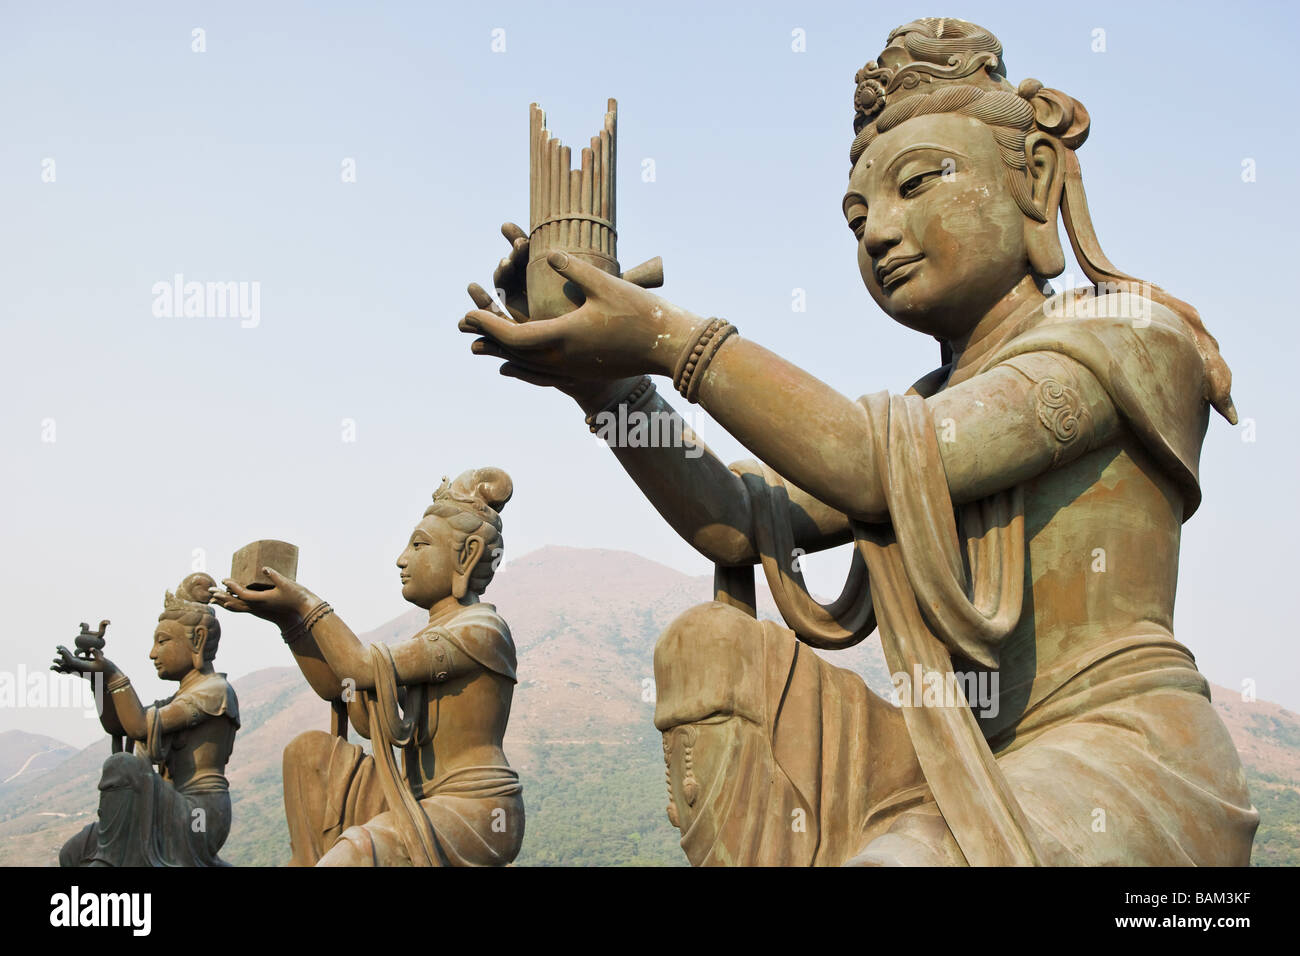 Près de Tian Tan Buddha statues Banque D'Images